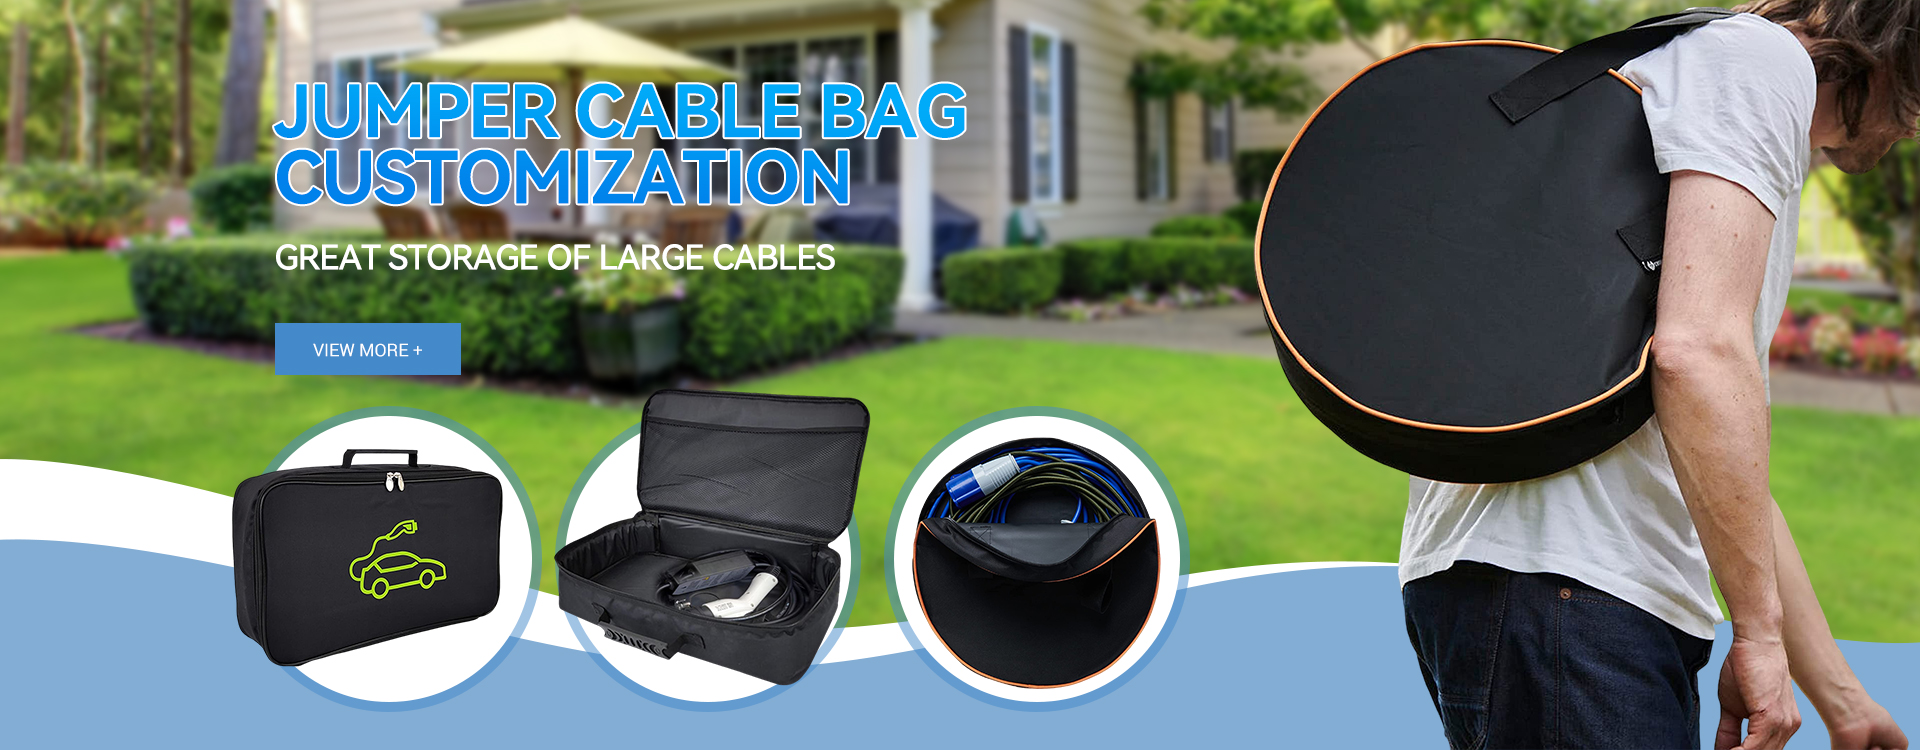 GZBAG Advertising canvas bag/paper bag customization